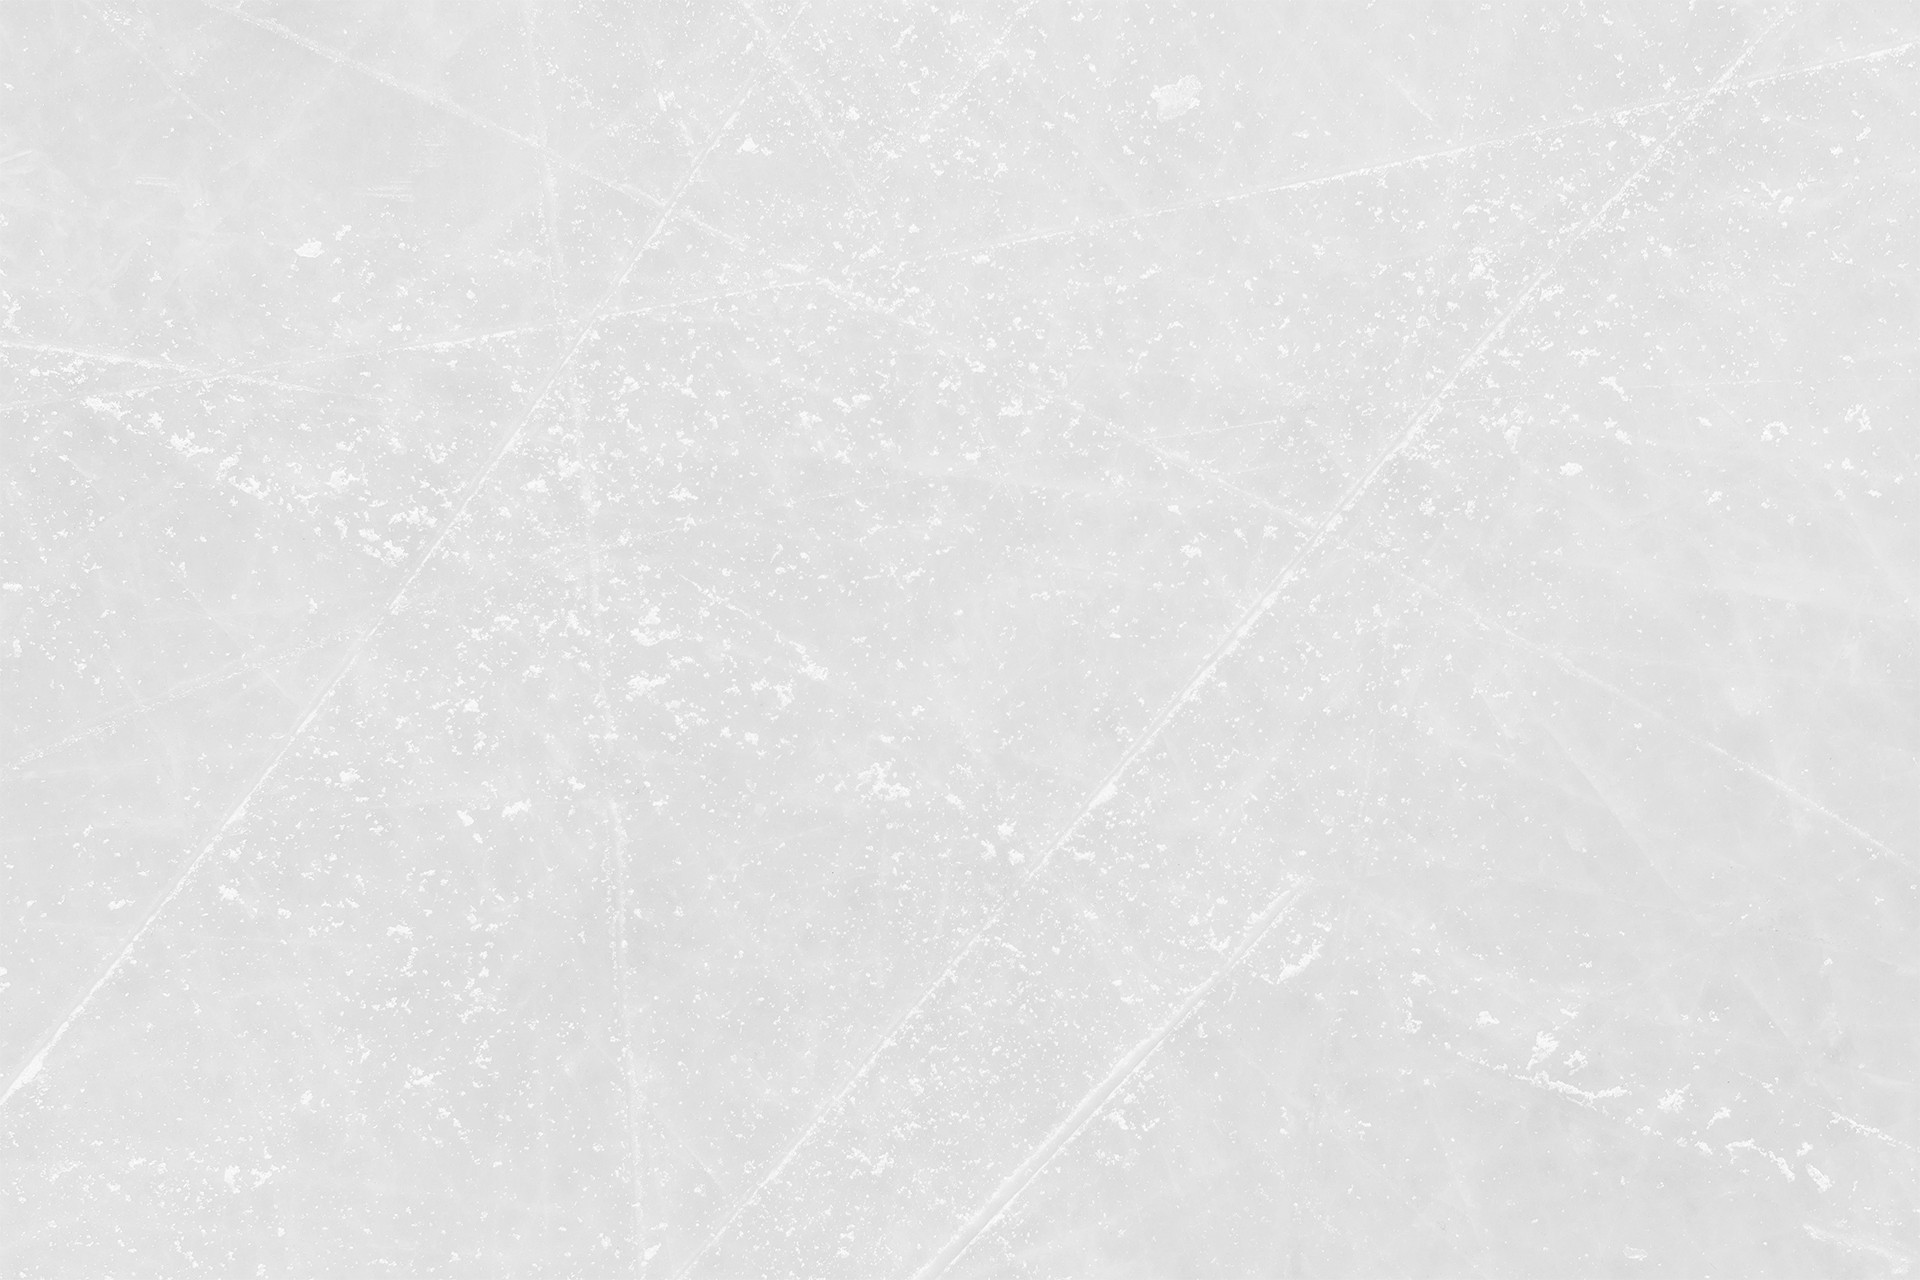 Icy Background Image